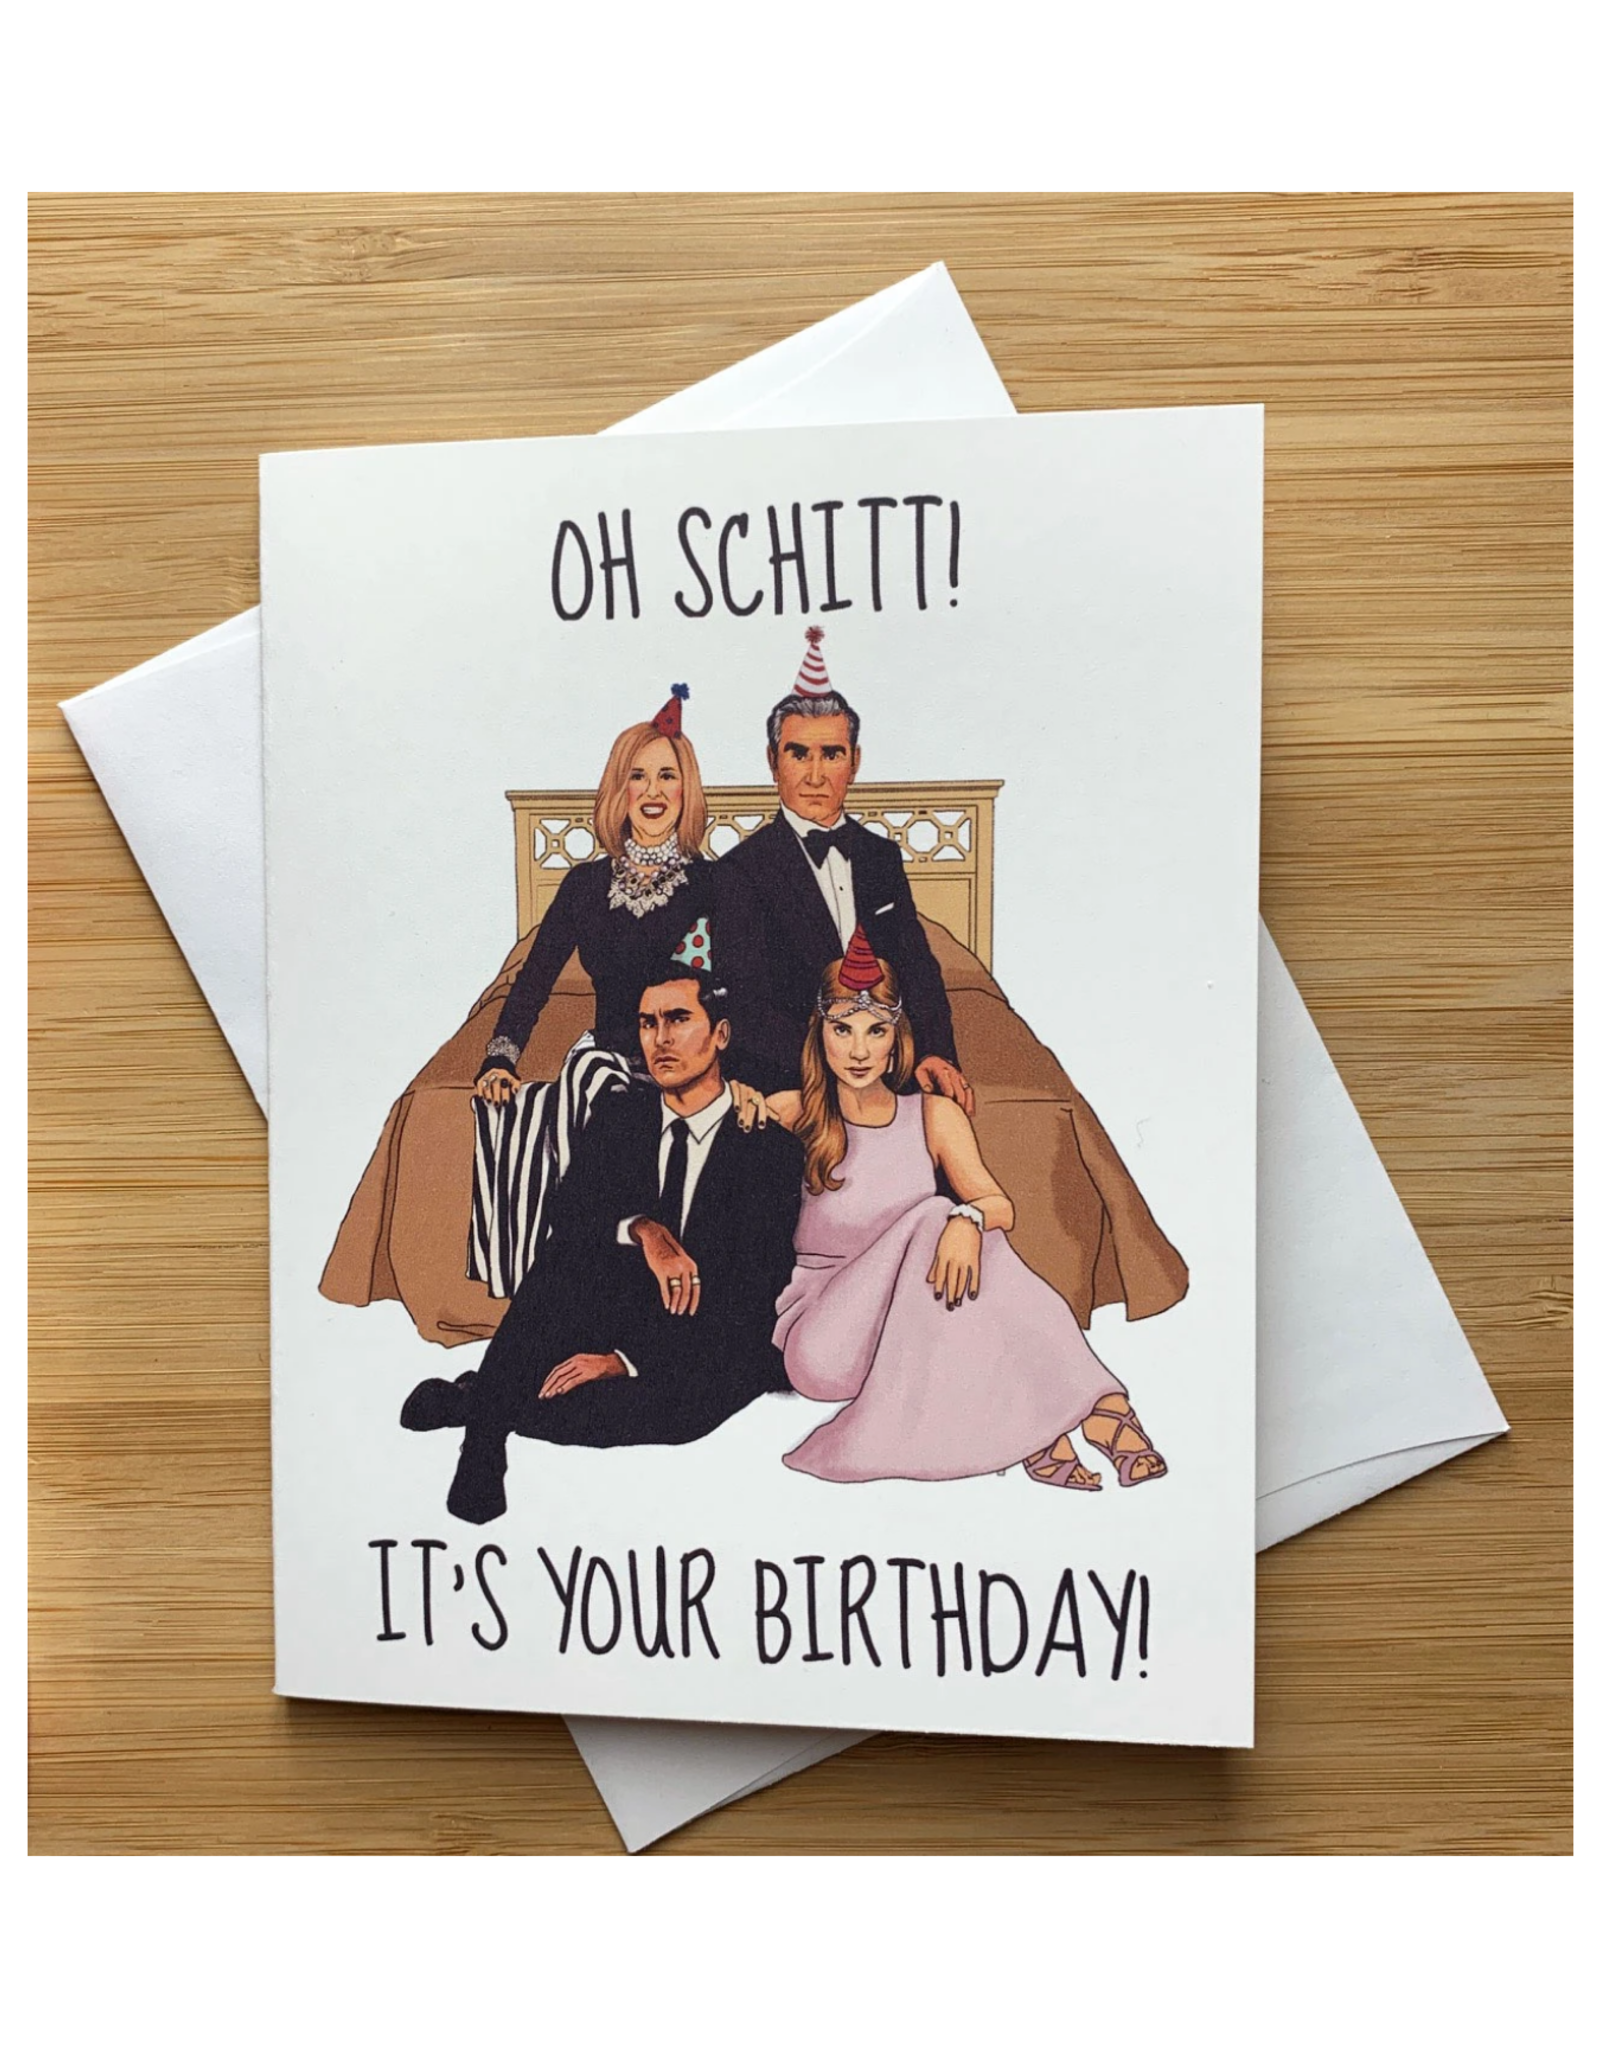 Oh Schitt! It's Your Birthday Greeting Card